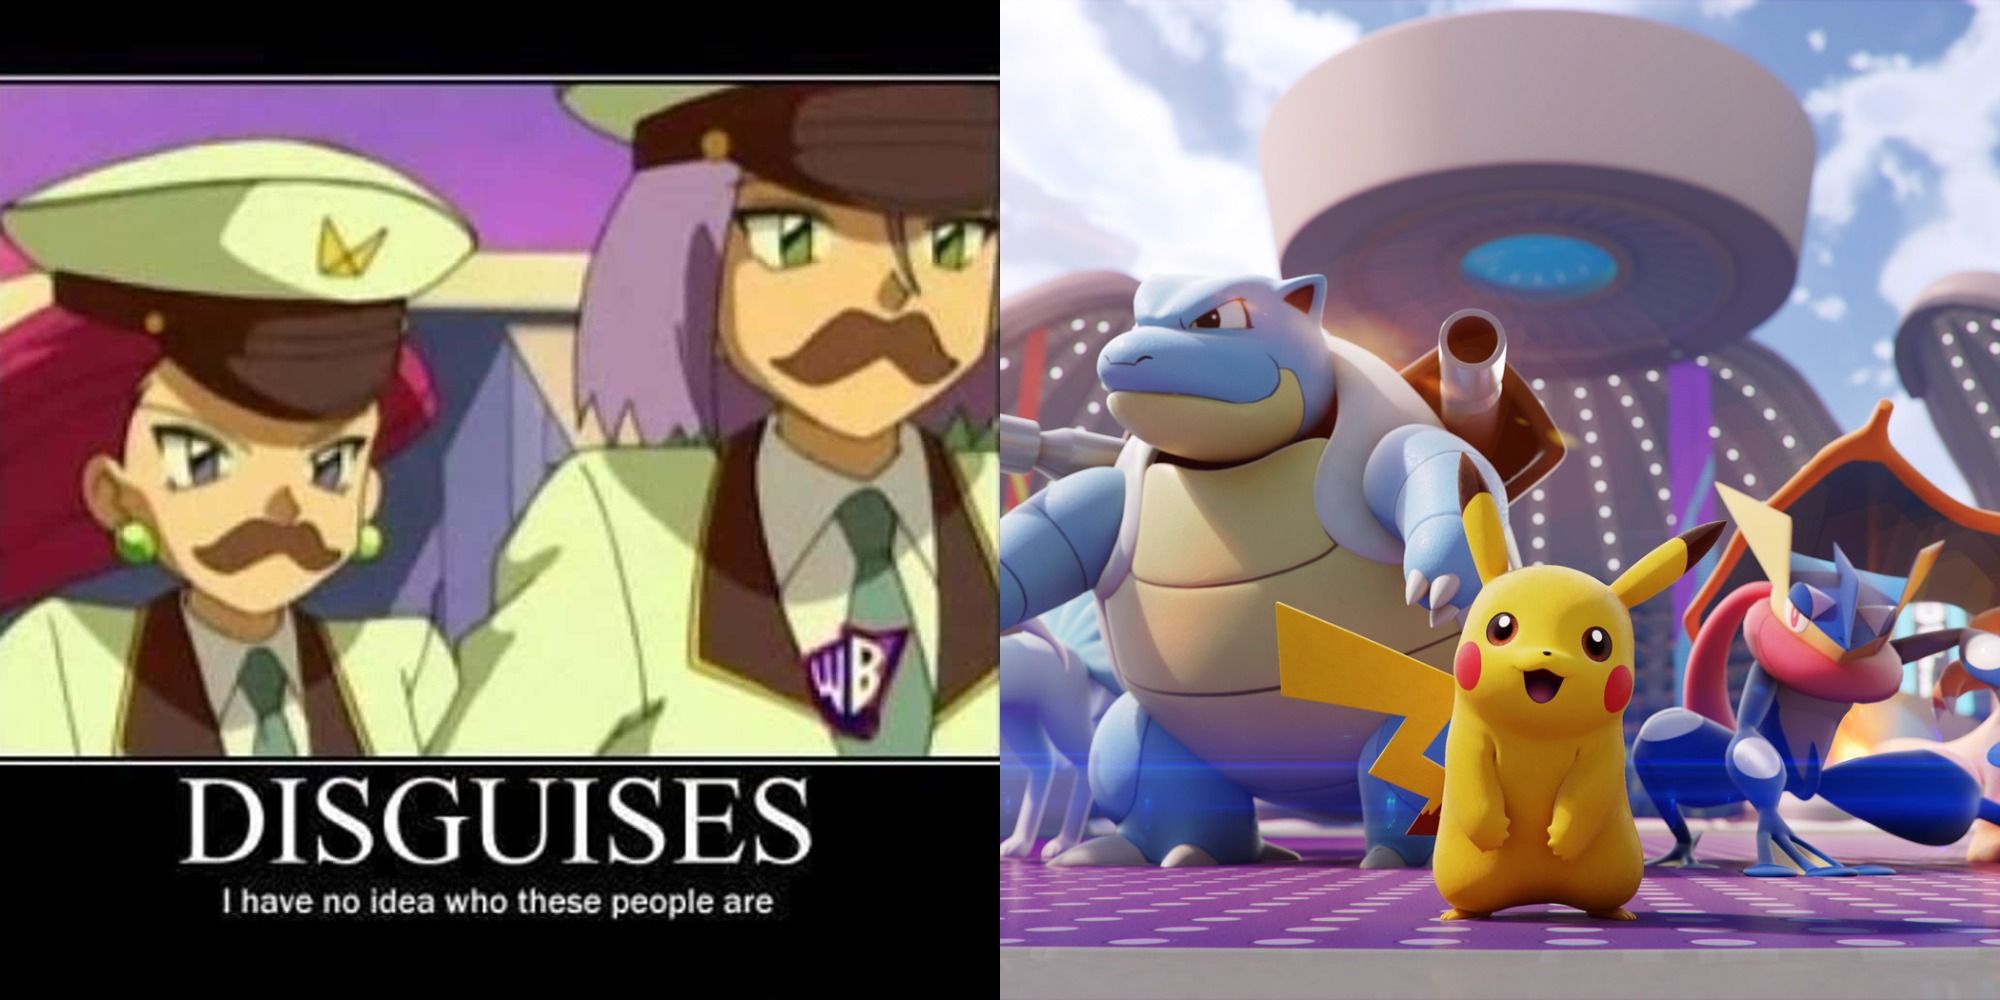 Split image of a Pokemon meme and an image of Pokemon Unite